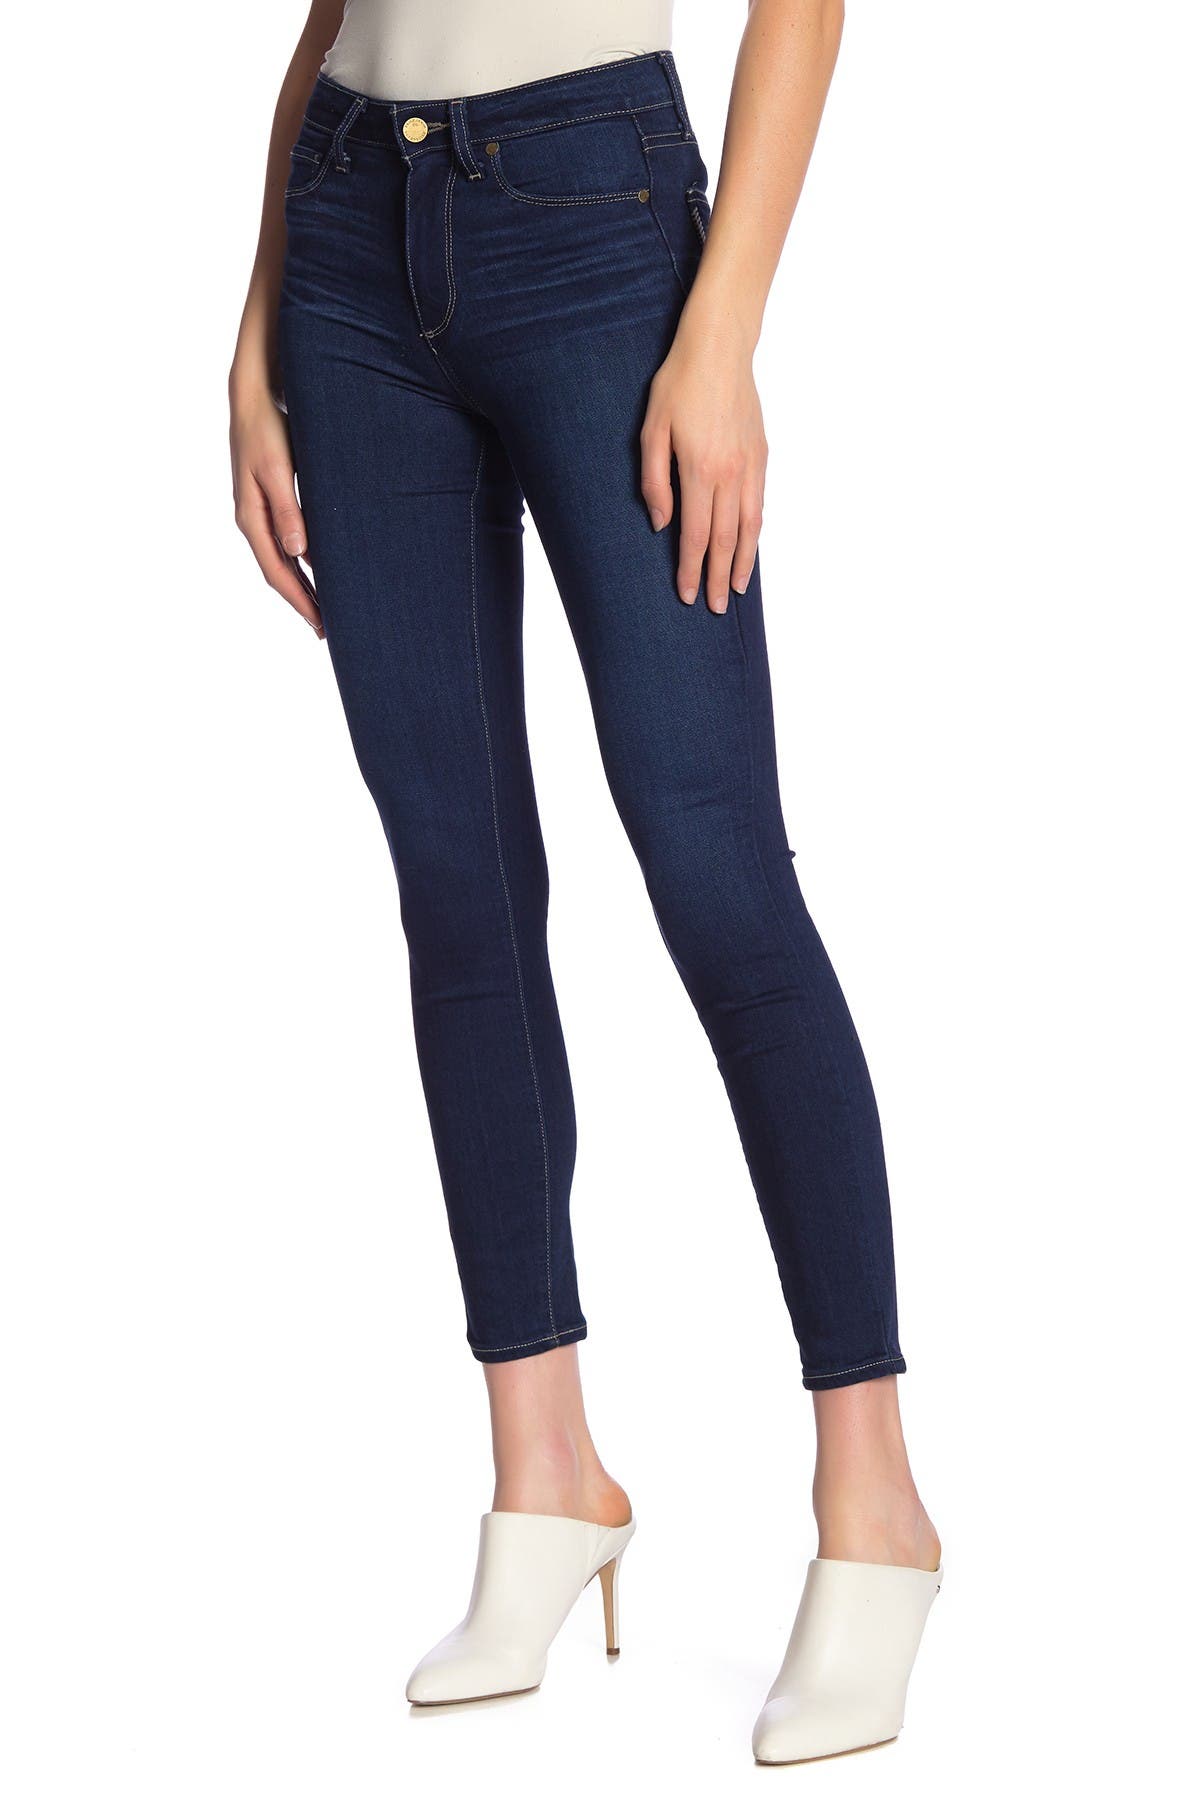 paige skinny jeans nordstrom rack